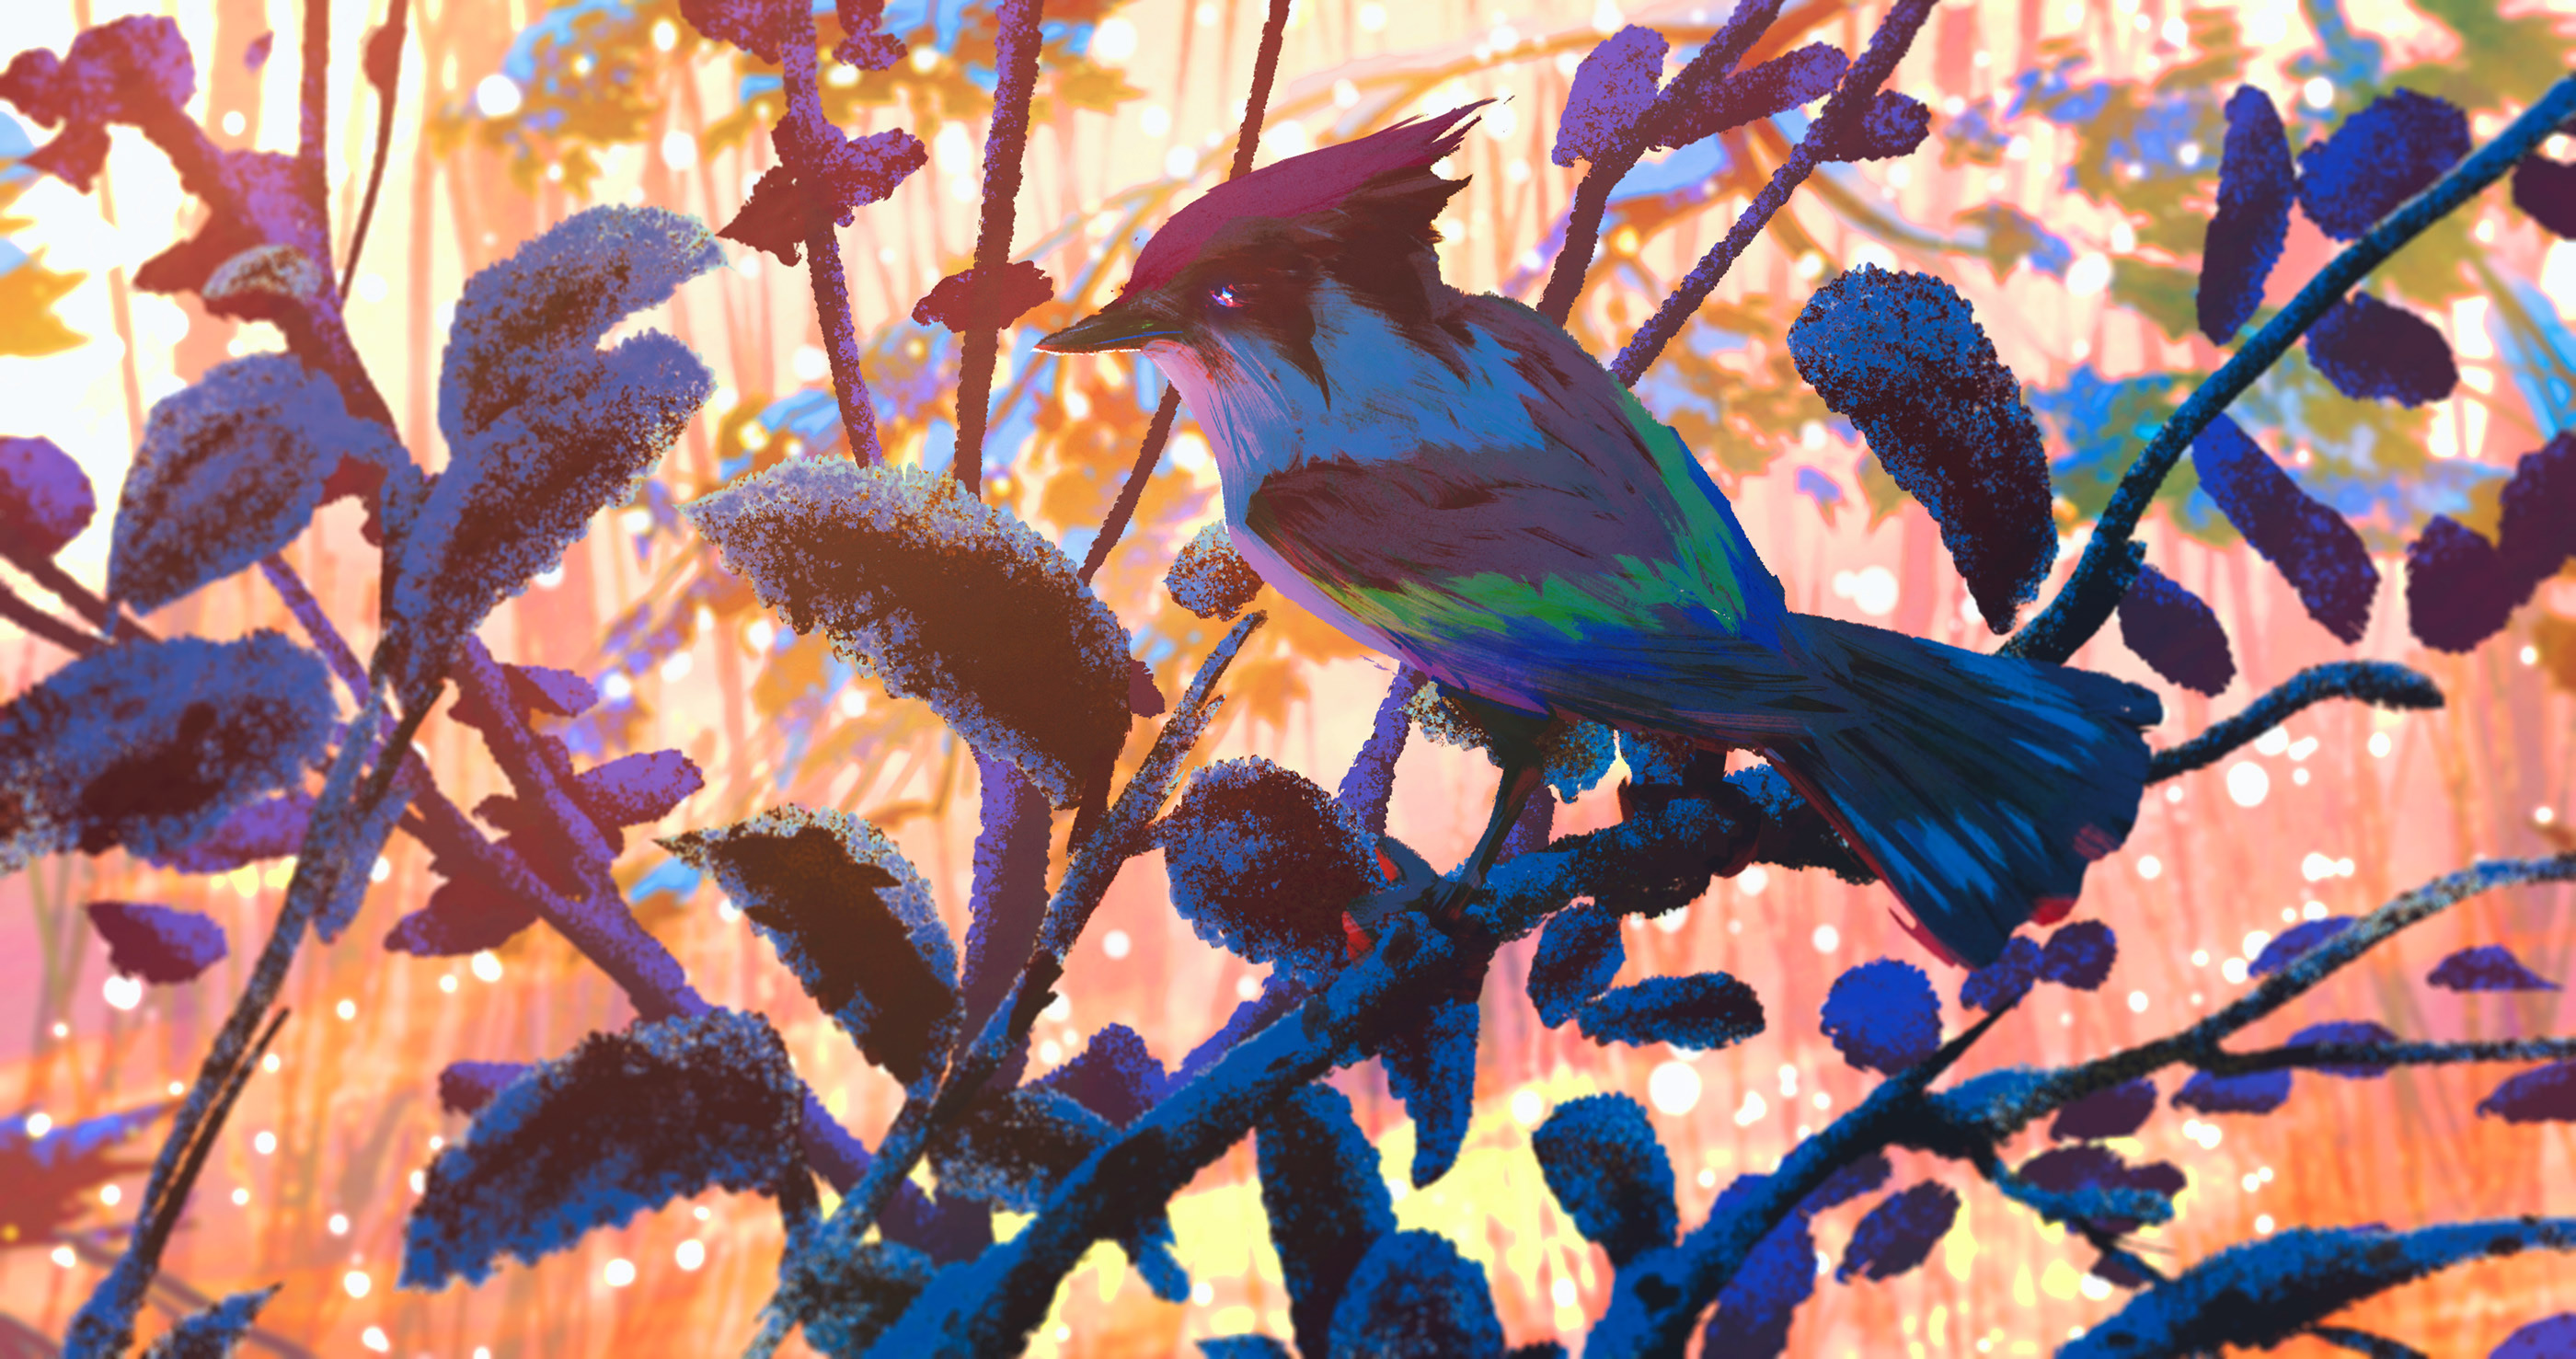 Gabriel Gomez Digital Art Birds Branch Sunlight Nature Waxwings Leaves 2800x1477